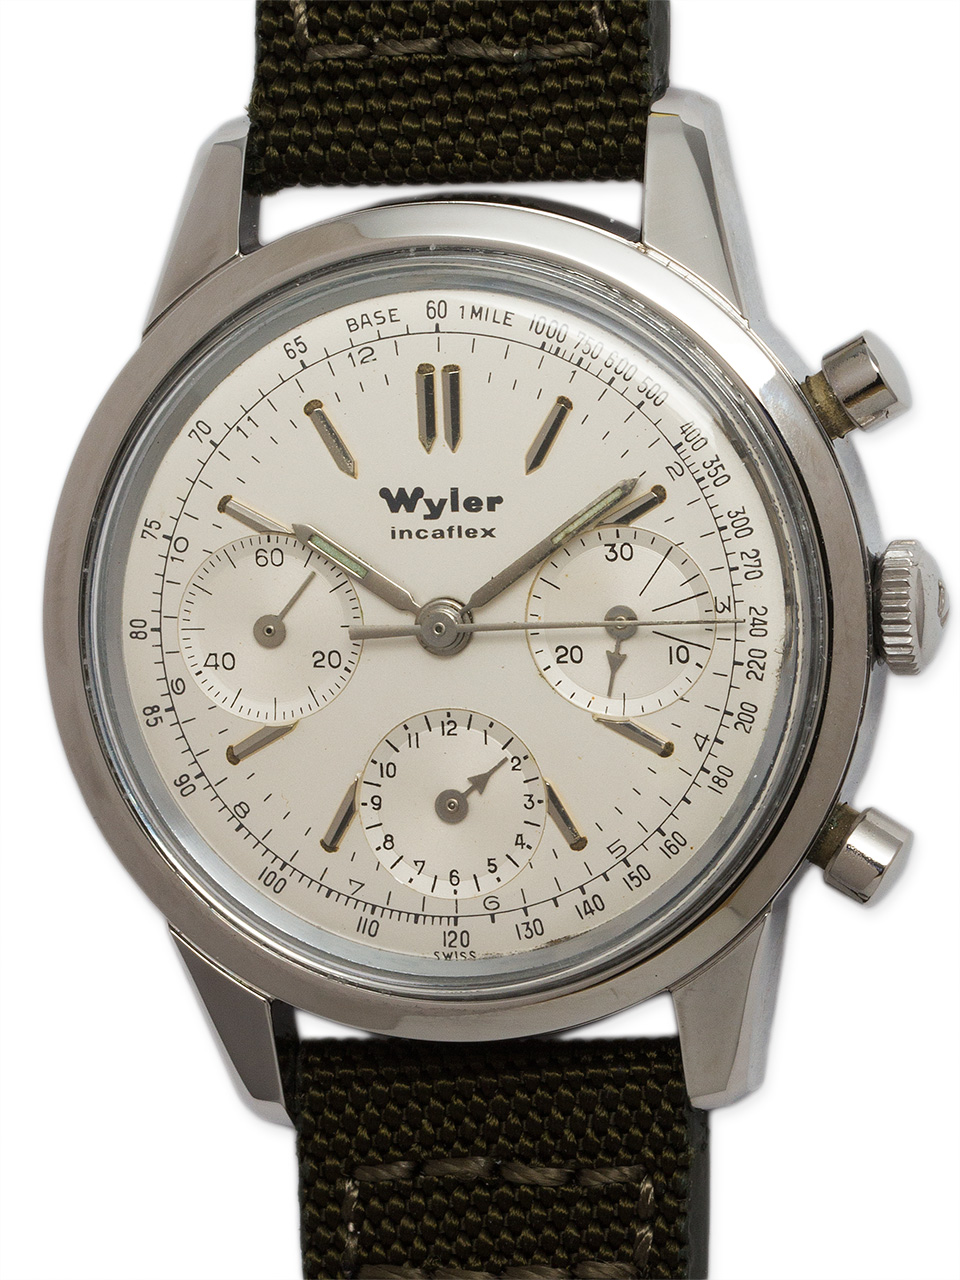 Wyler SS Incaflex Valjoux 72 Chronograph circa 1960’s